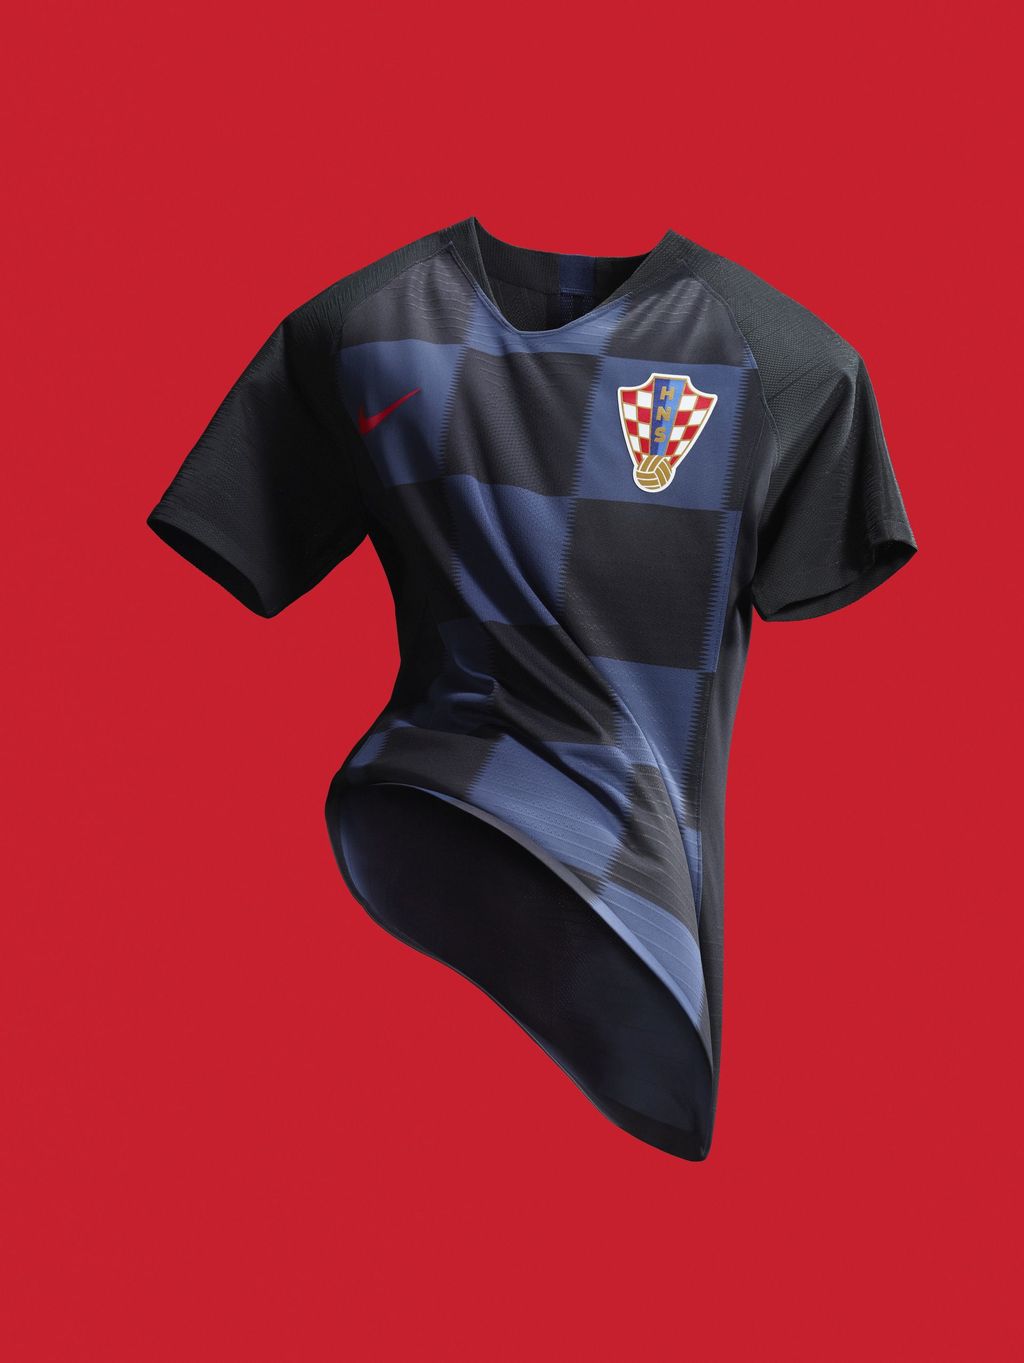 Novi dres hrvatske reprezentacije (Foto: HNS/Nike)